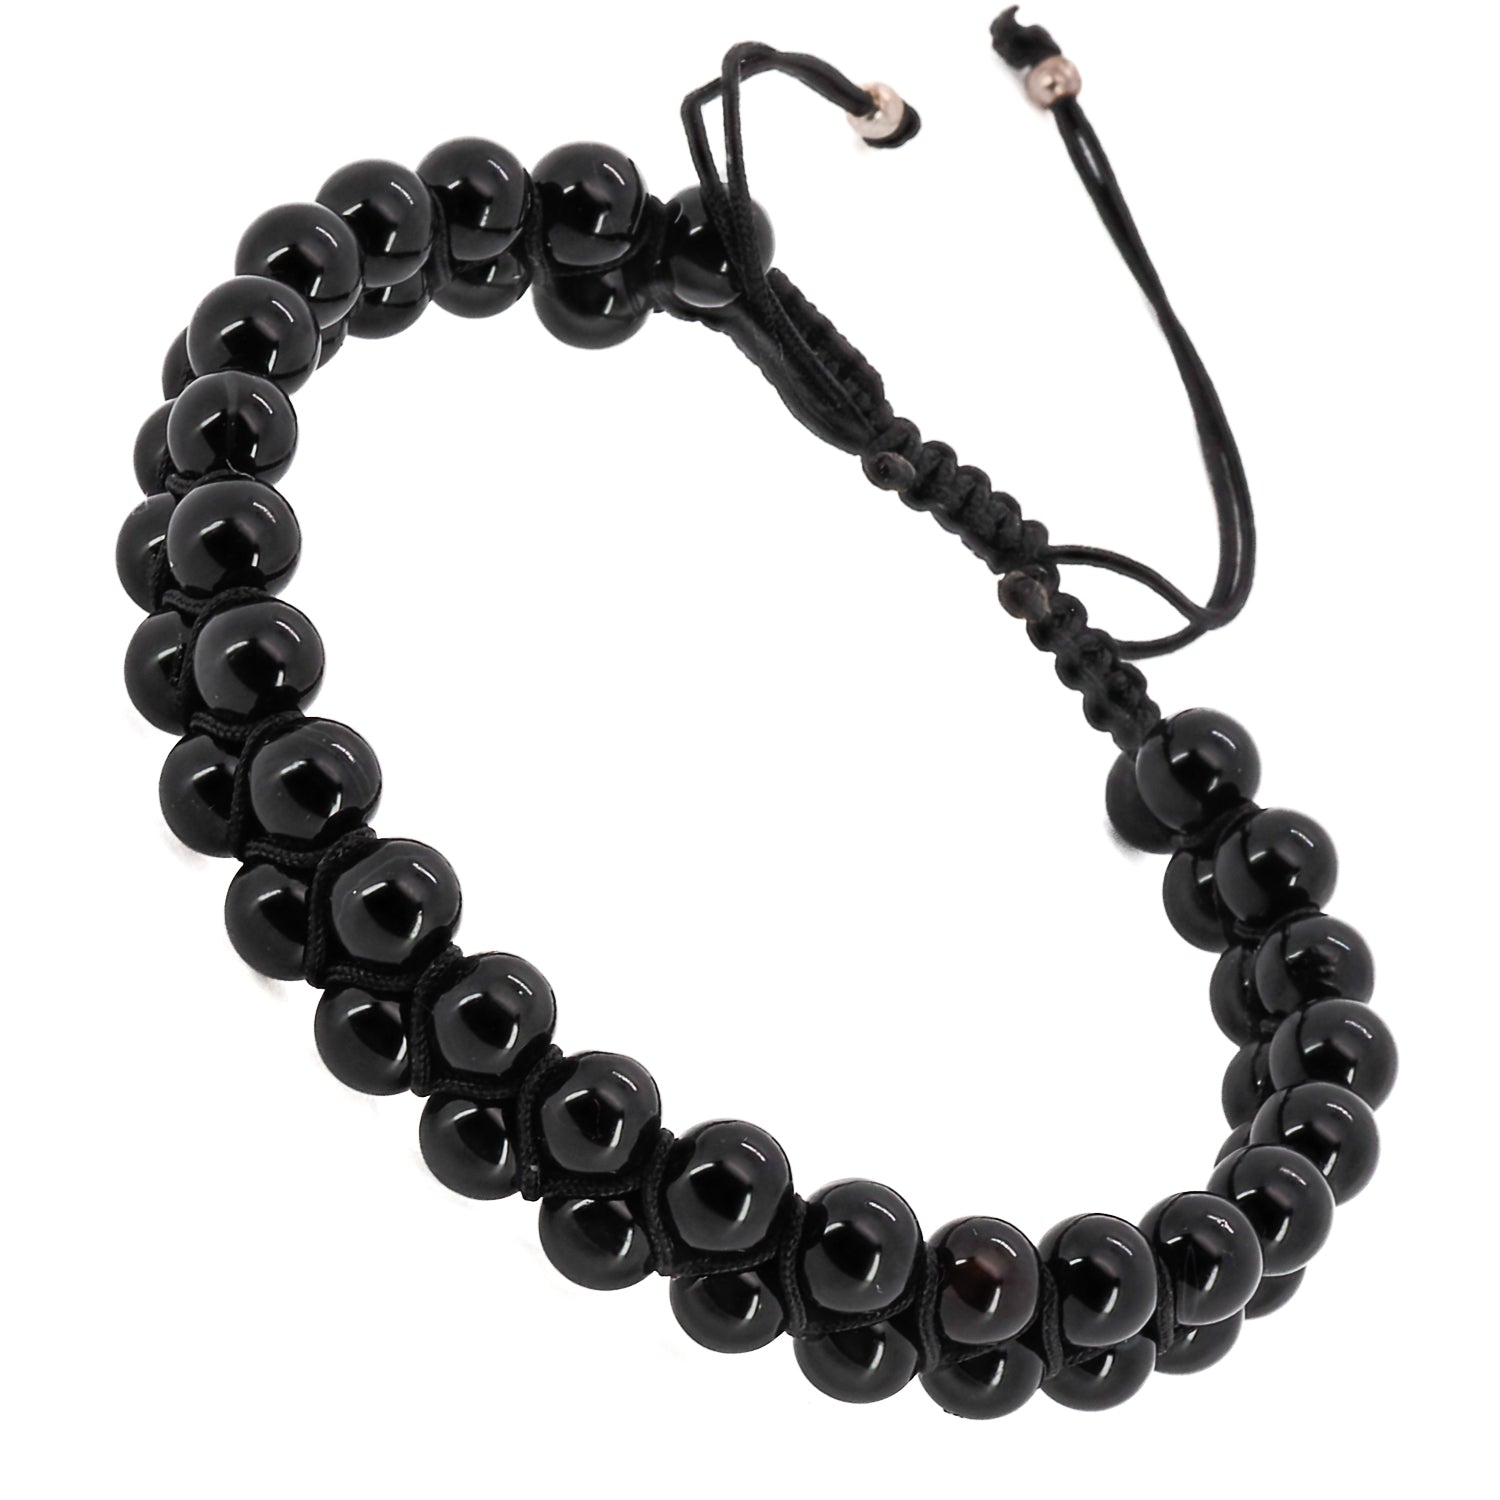 Adjustable Size Self Control Bracelet with Black Onyx Stones